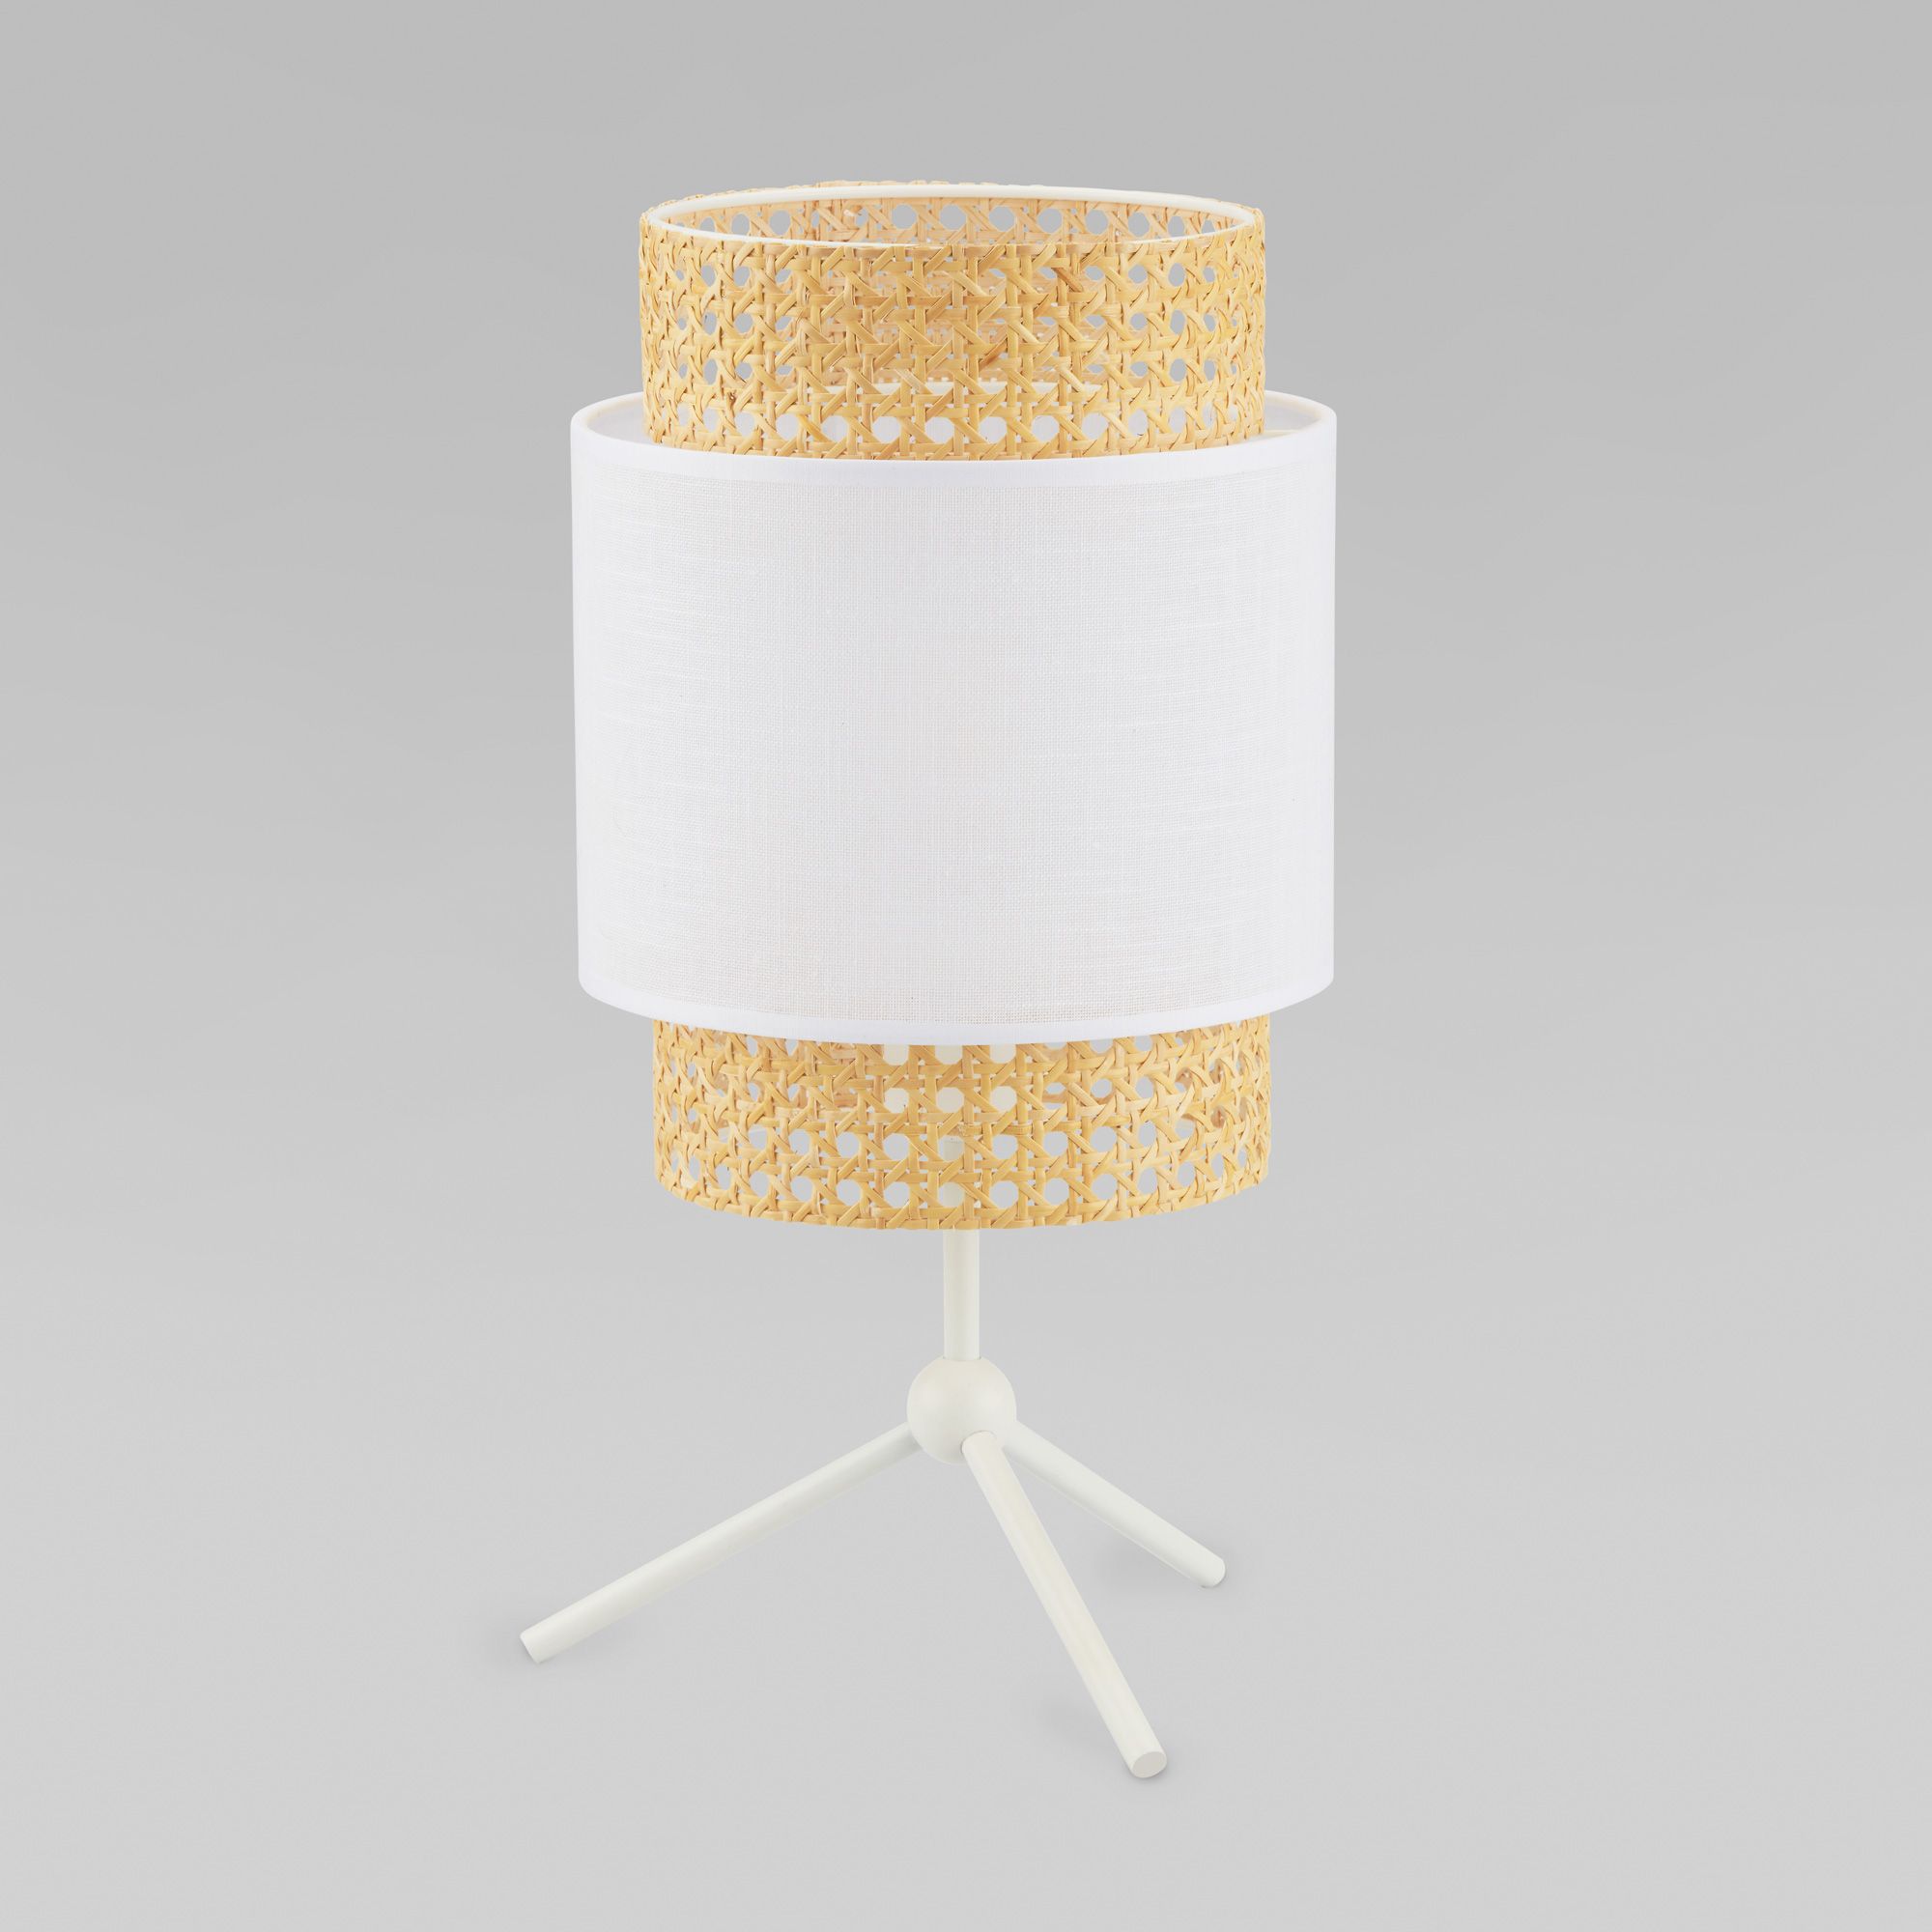 Настольный светильник с тканевым абажуром TK Lighting Boho 6565 Boho White. Фото 1